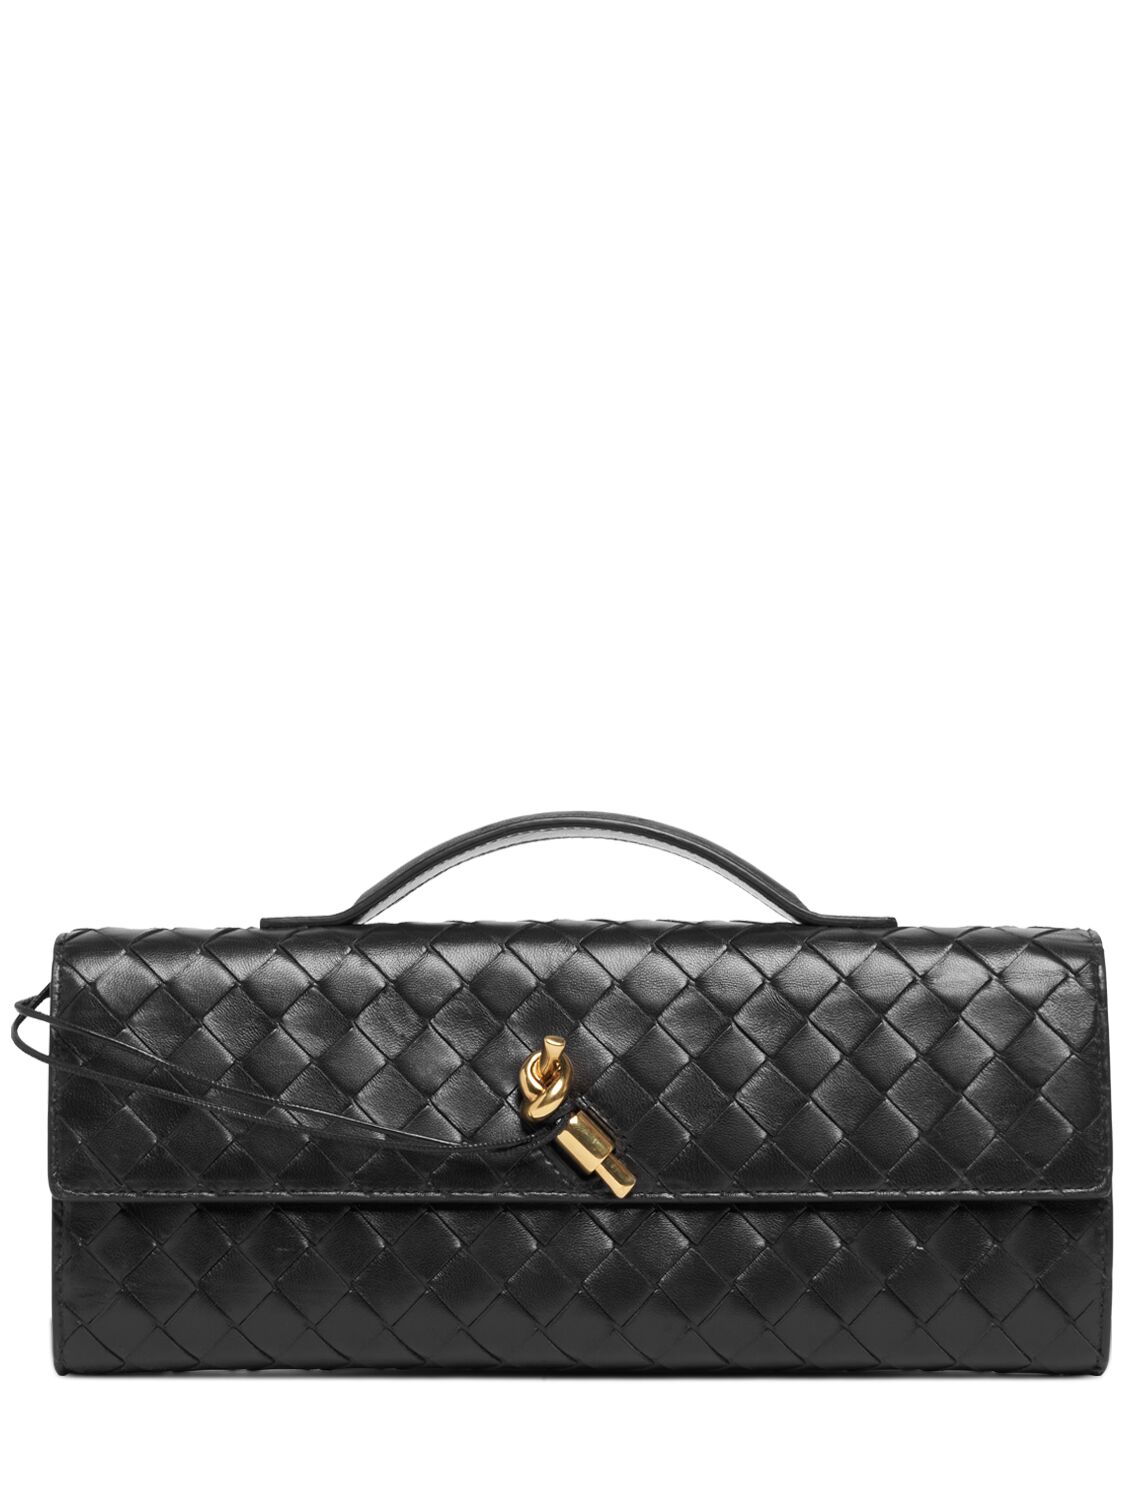 Bottega Veneta Long Clutch Leather Bag In Black